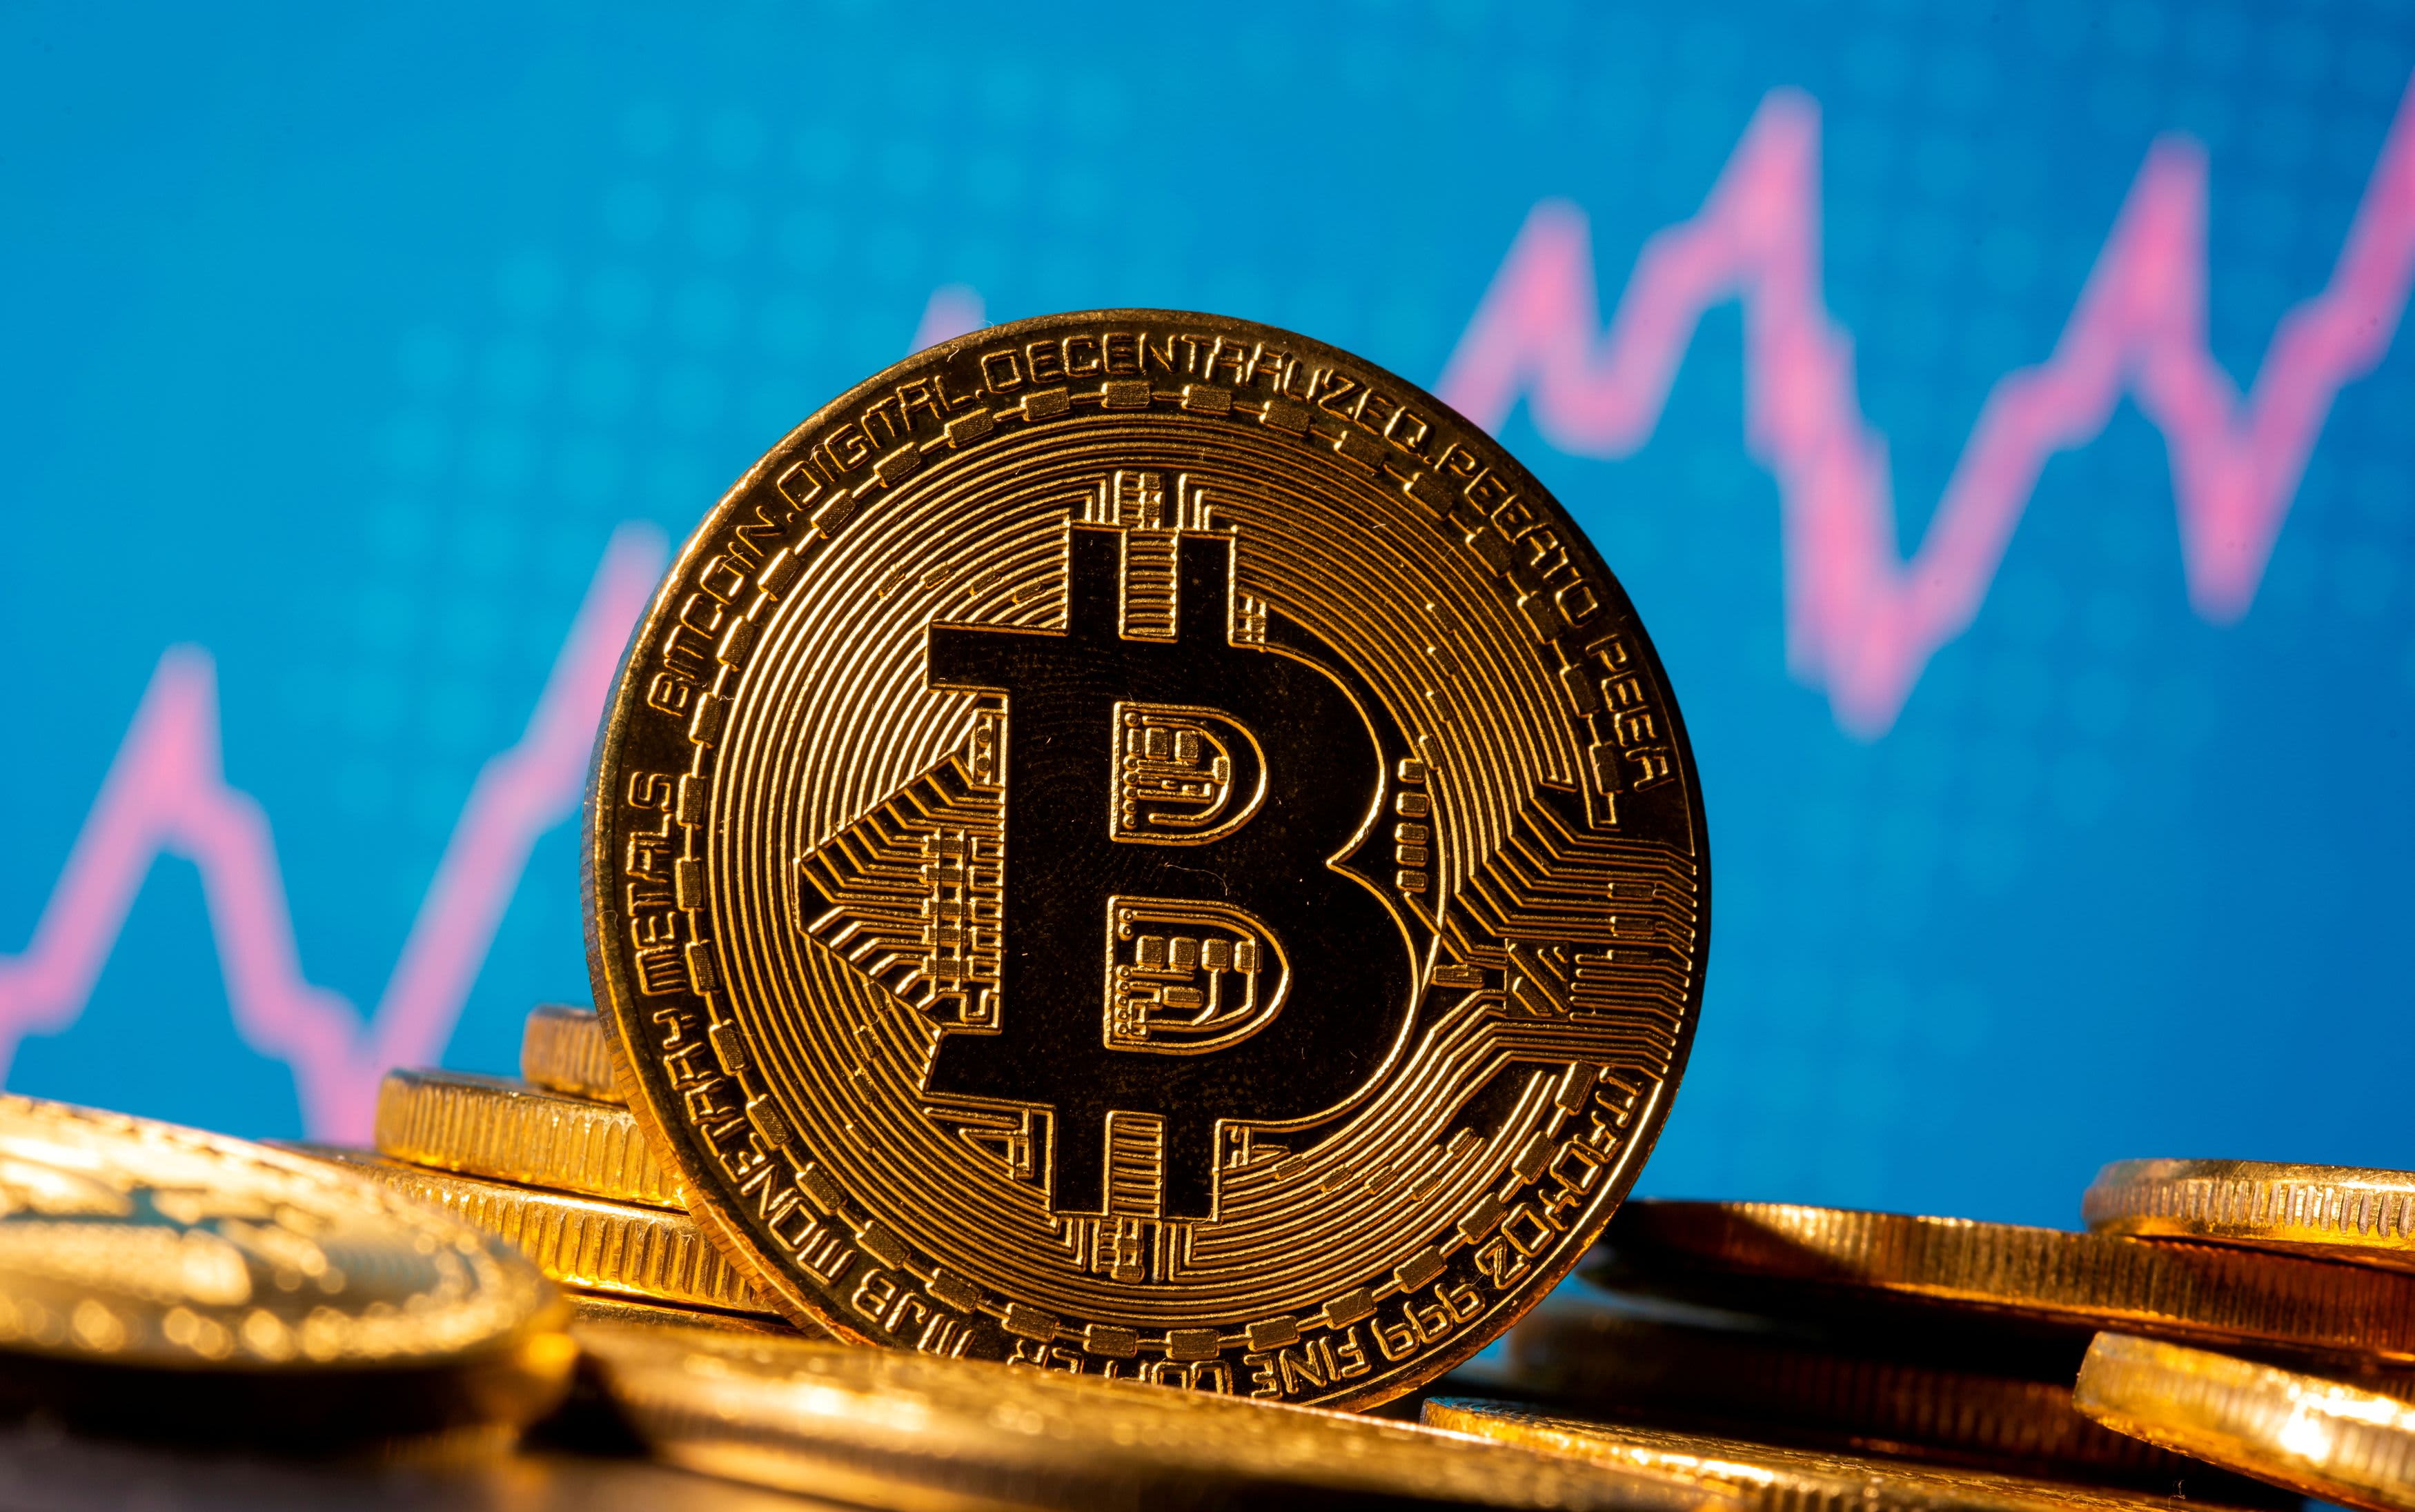 Le bitcoin se dirige vers un prix record de plus de 62 000 $